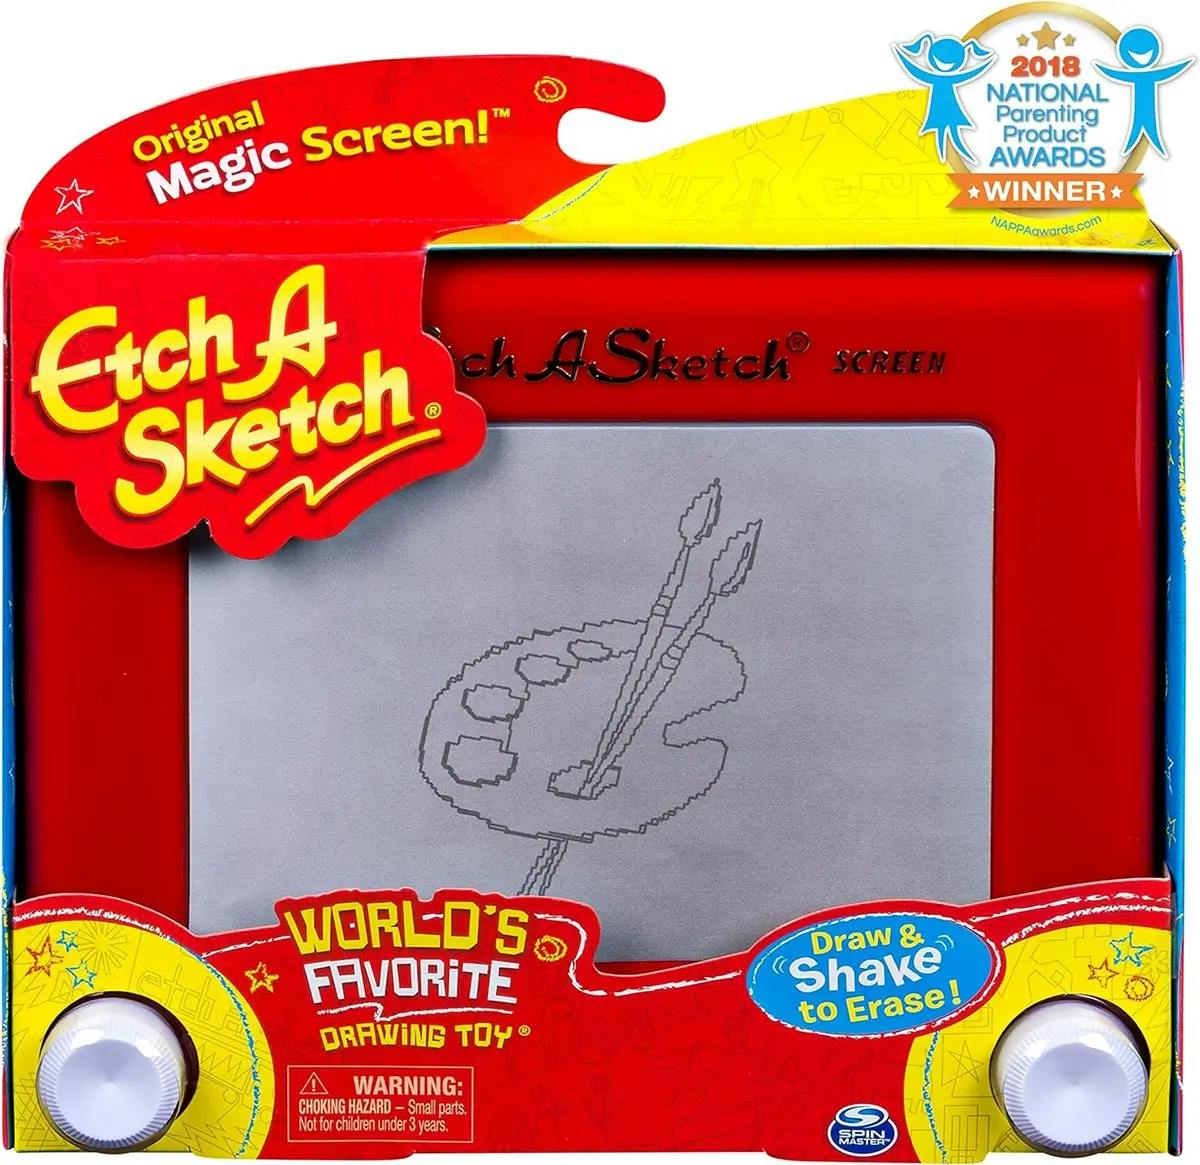 Etch A Sketch offline game for kids.